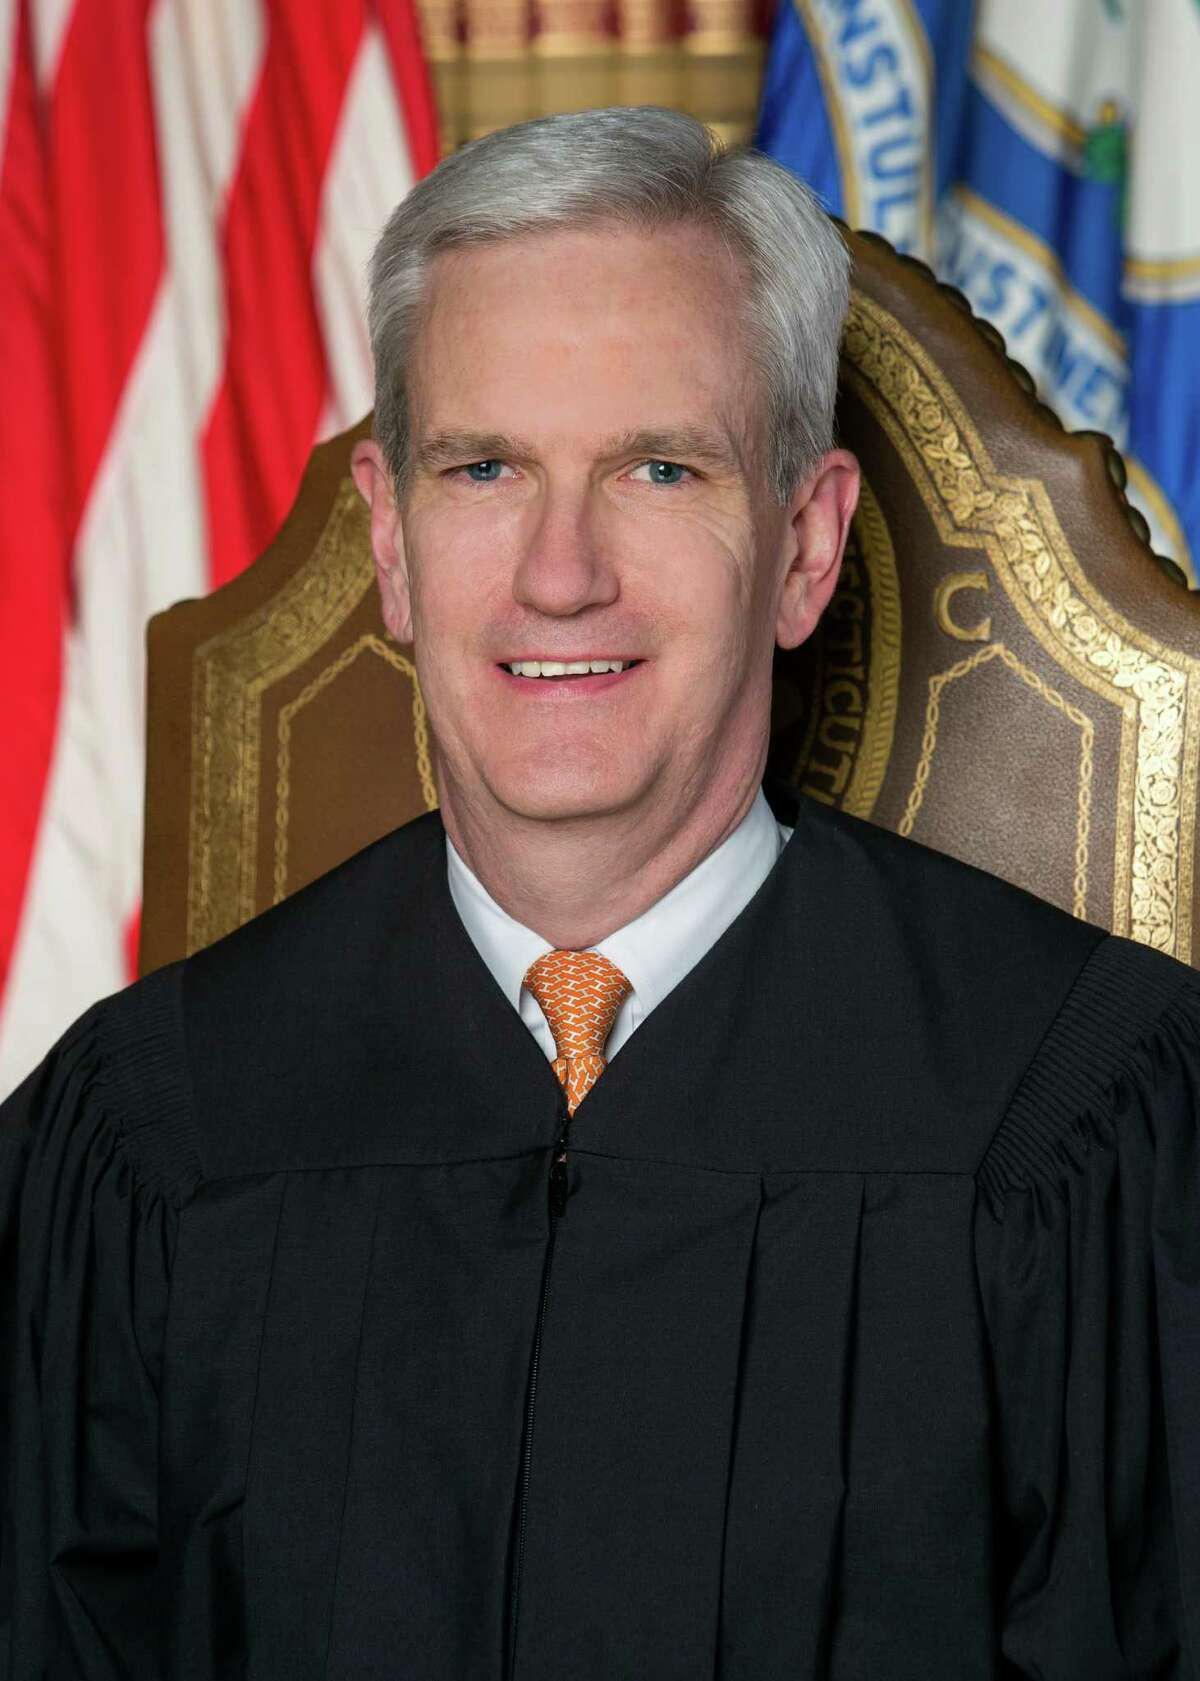 Justice Andrew J. McDonald